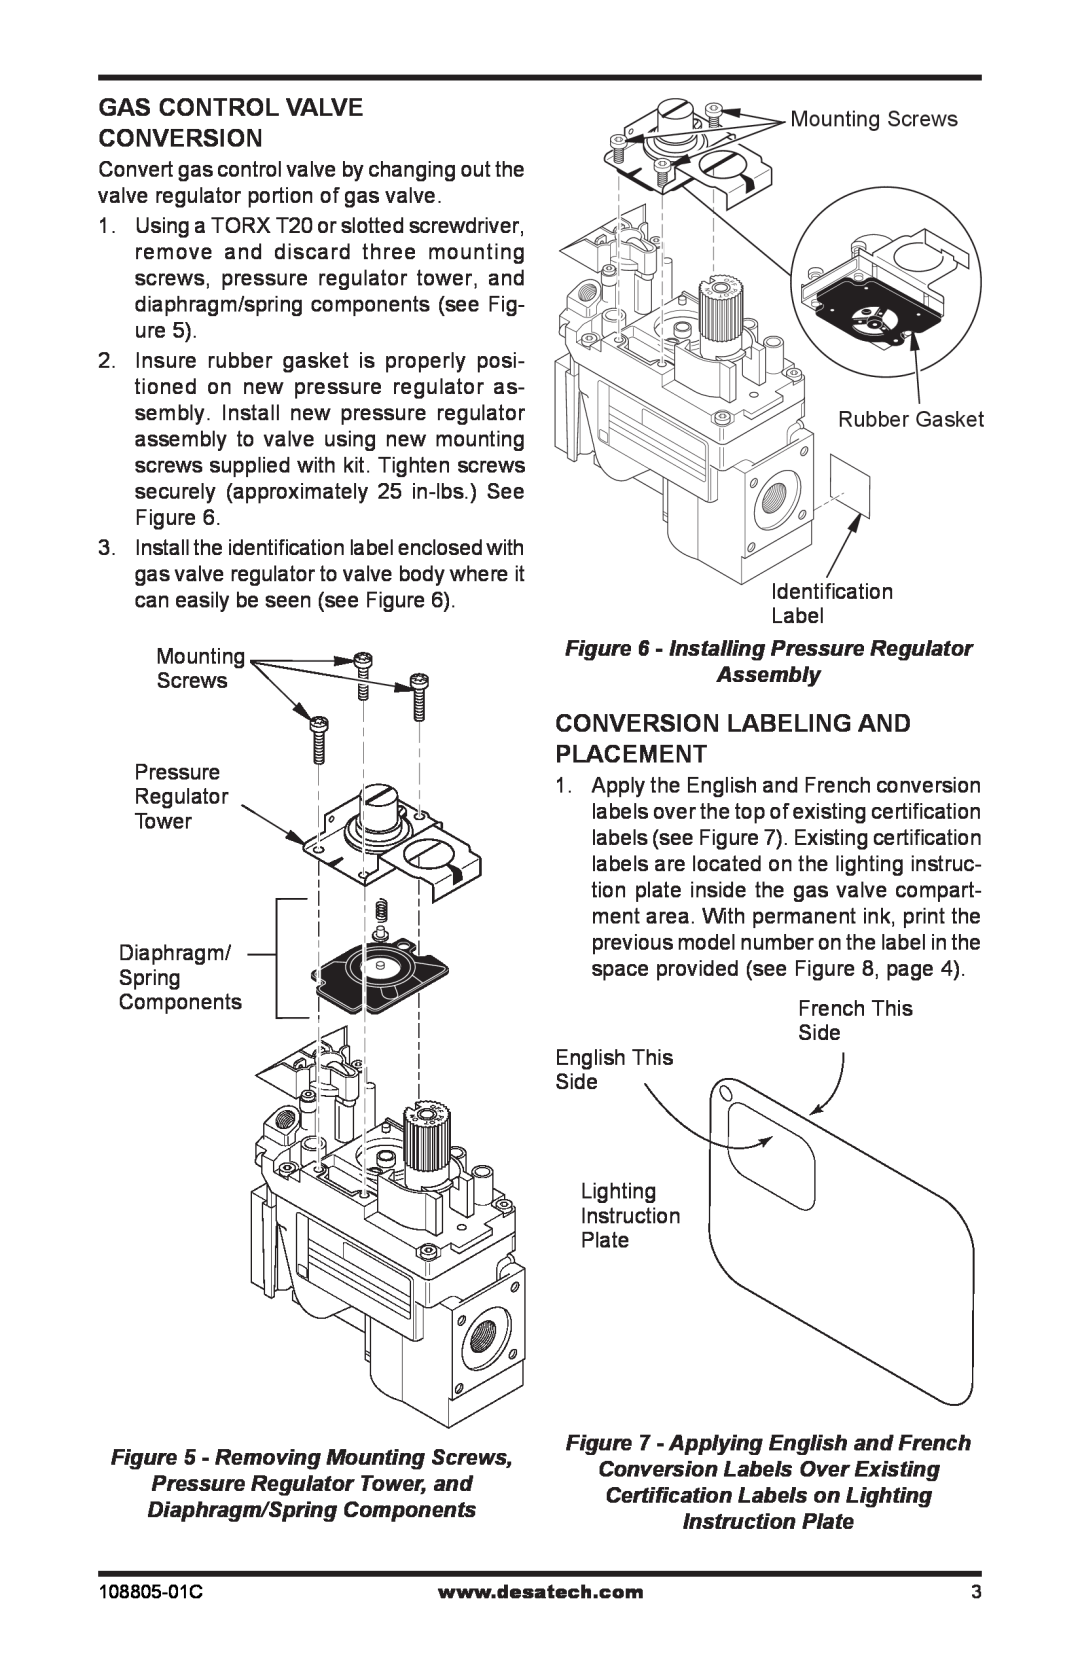 Desa PCBM-325 Installing Pressure Regulator Assembly, Removing Mounting Screws, Applying English and French 